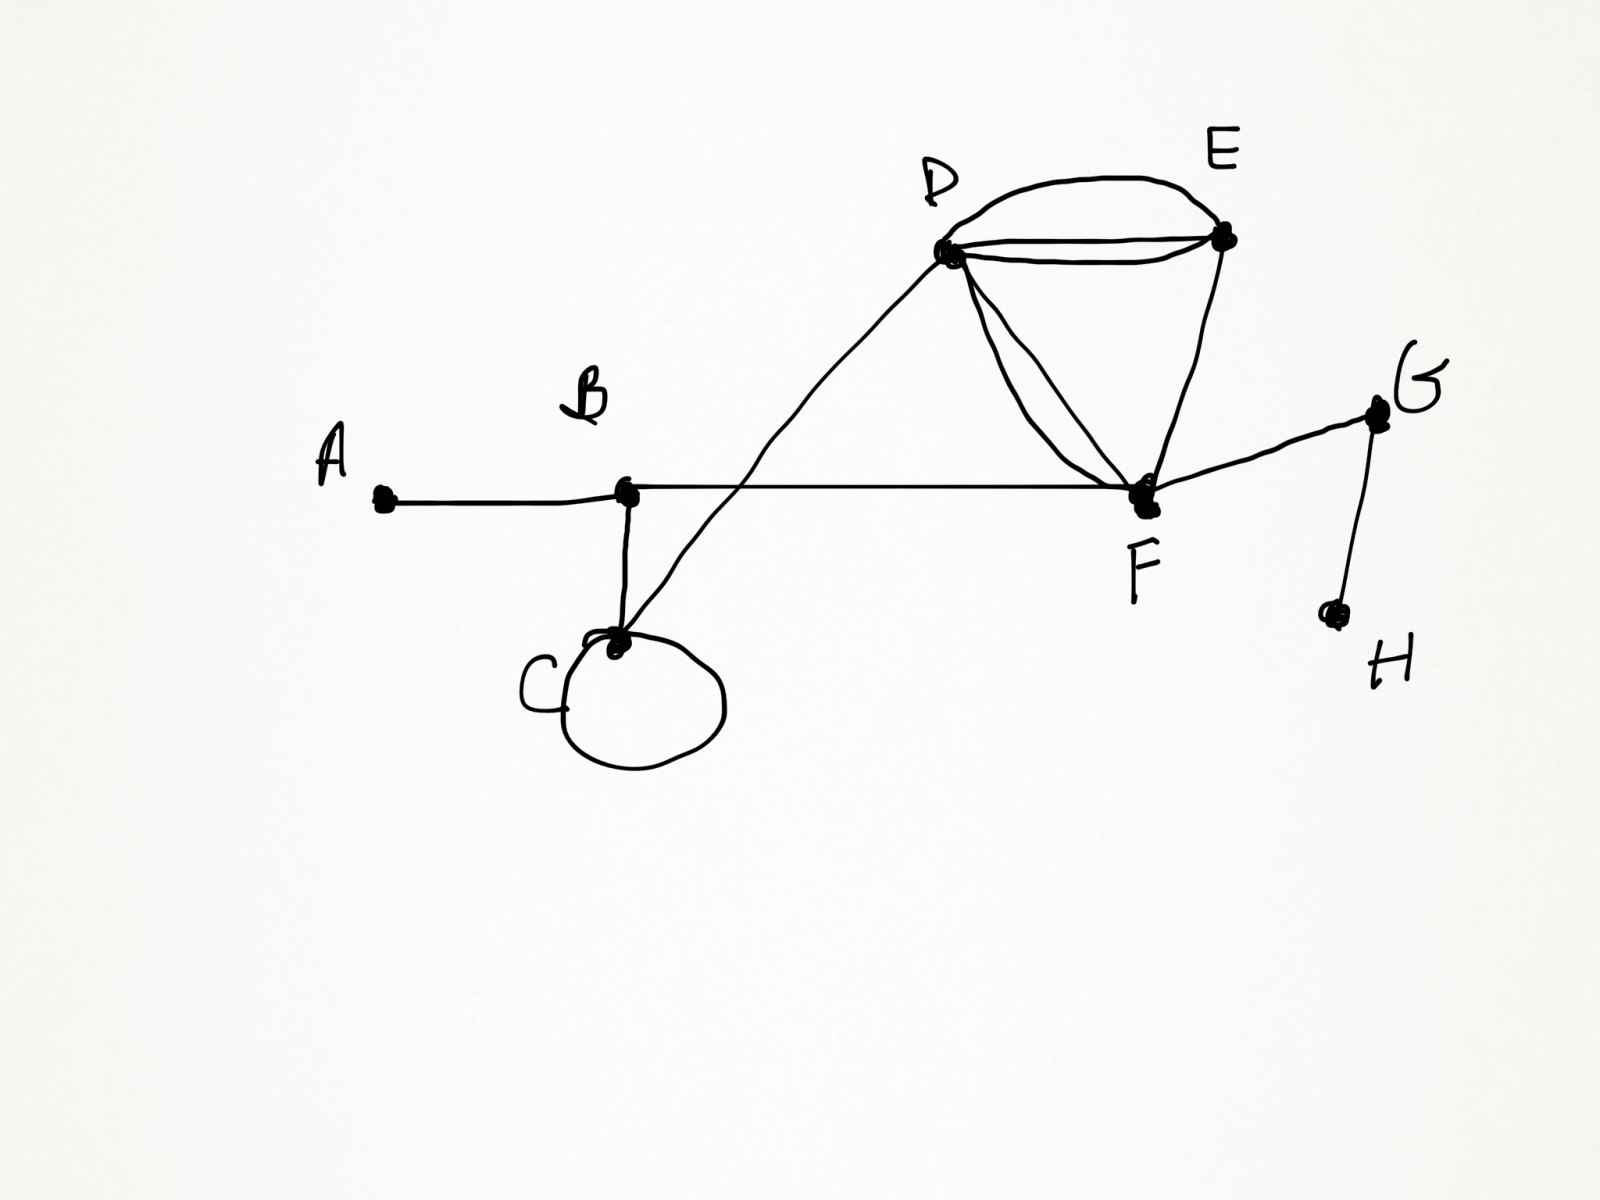 Dm: Chapter 4 Euler & Hamilton Paths/Circuits